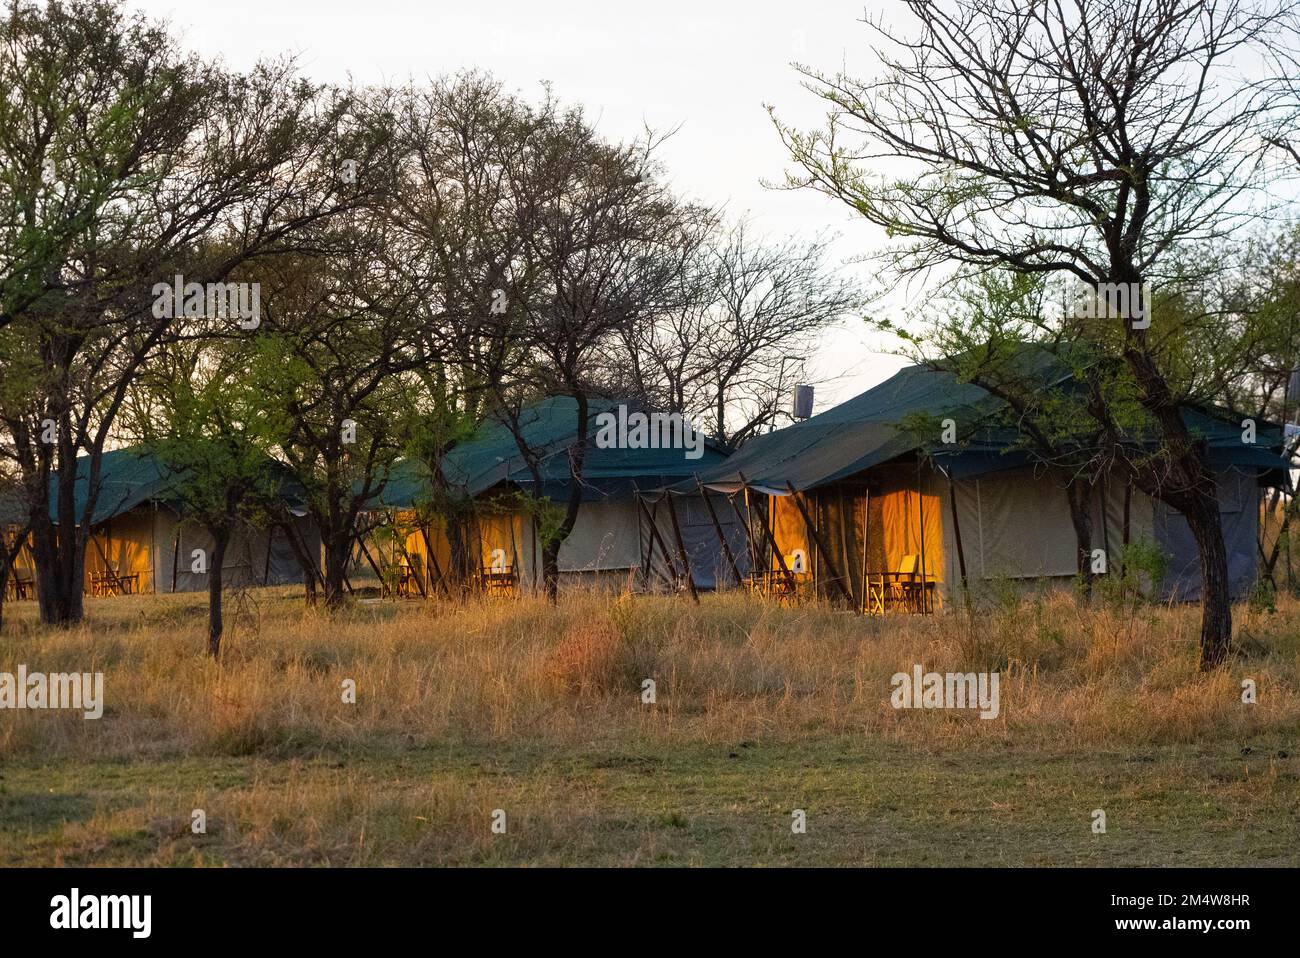 African Wildlife Safari Camp in der Wildnis. Fotografiert in Tansania Stockfoto